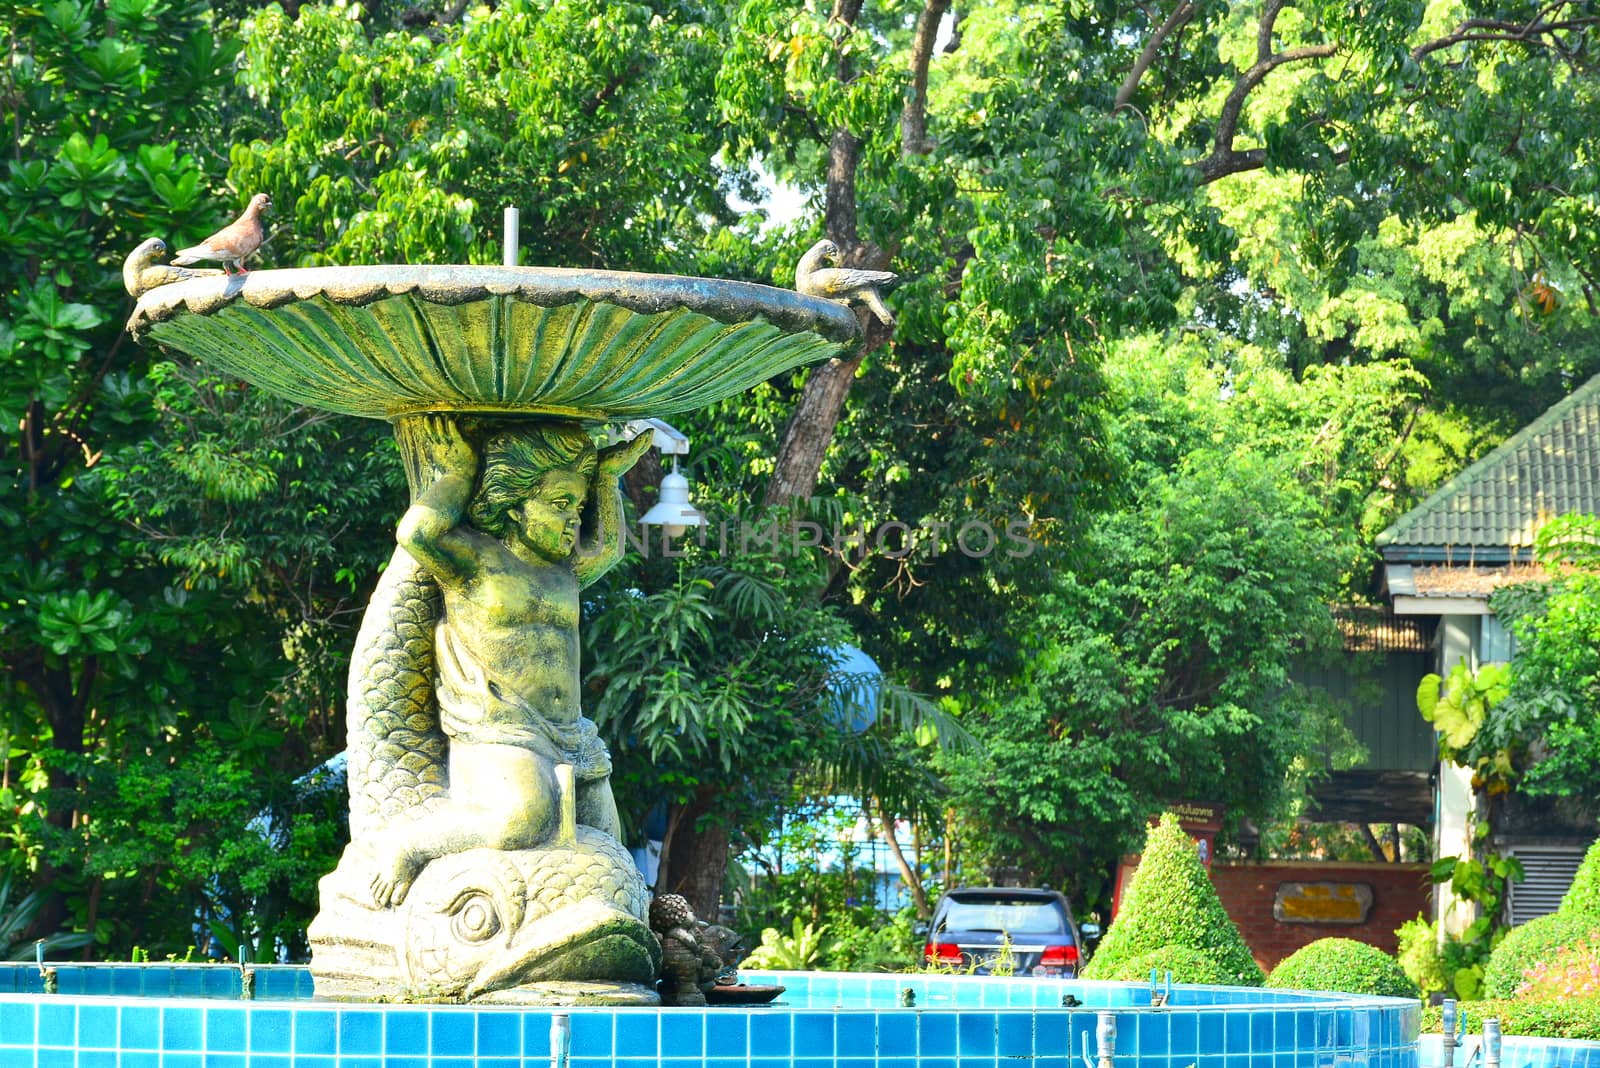 BANGKOK, TH - DEC 13: Water fountain at Dusit Zoo on December 13, 2016 in Khao Din Park, Bangkok, Thailand. Dusit Zoo is the oldest zoo in Bangkok, Thailand.